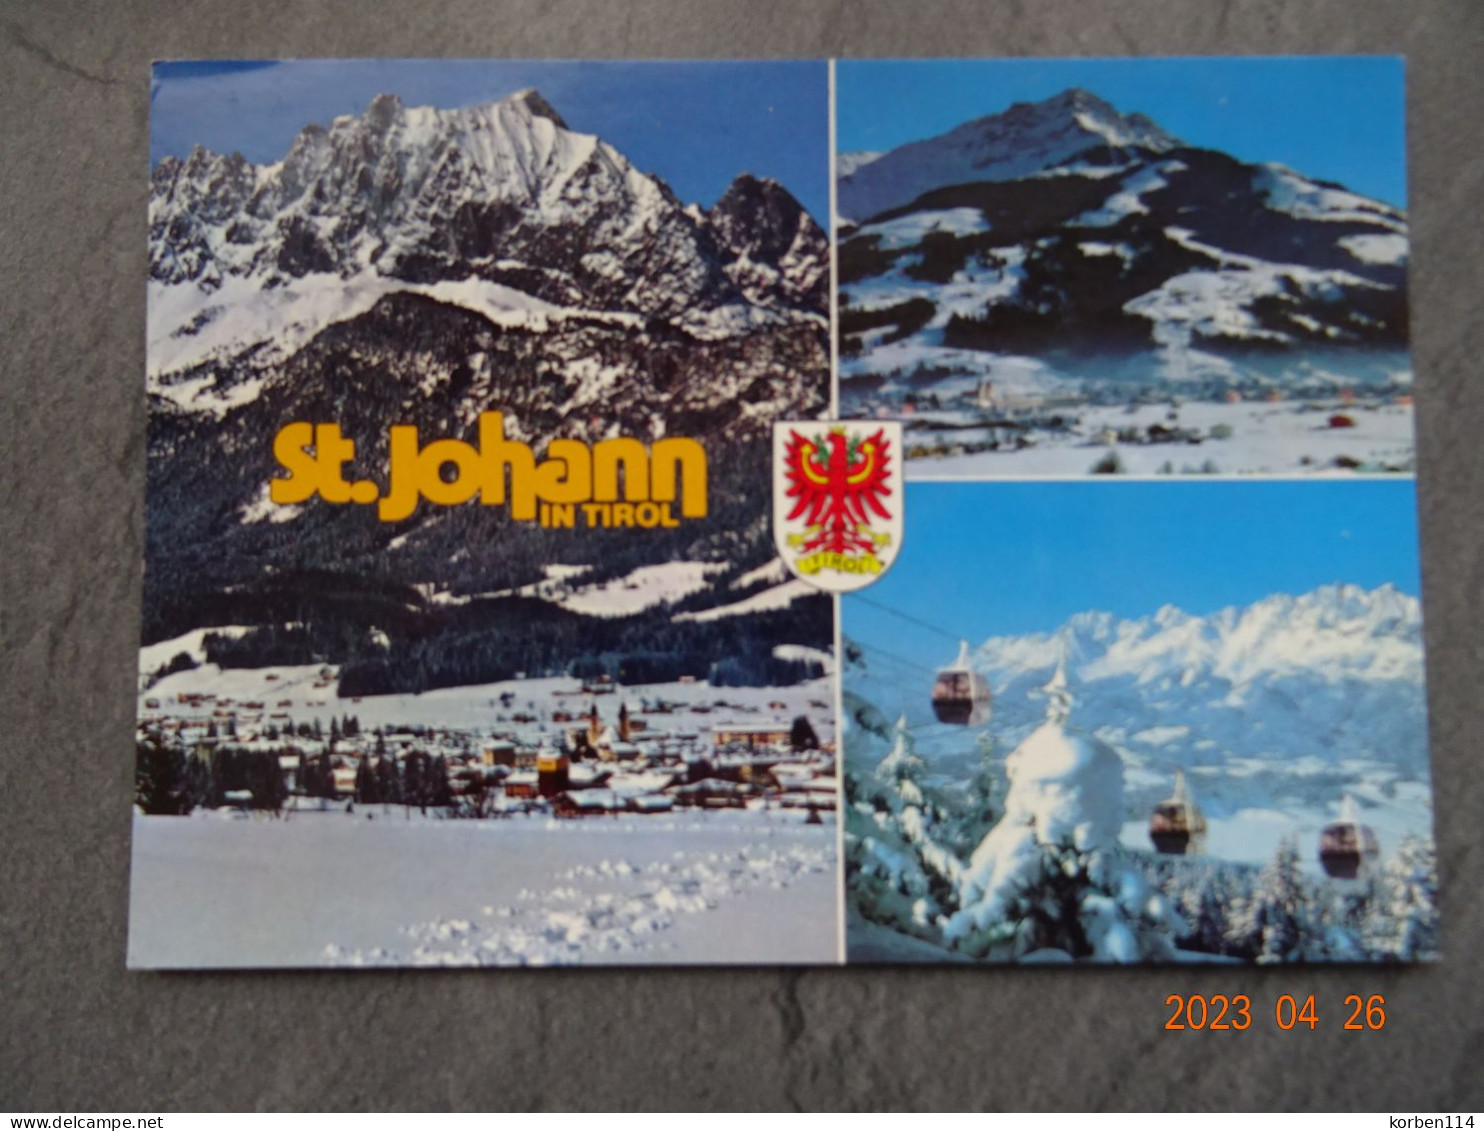 URLAUBGRUSSE AUS ST. JOHANN - St. Johann In Tirol